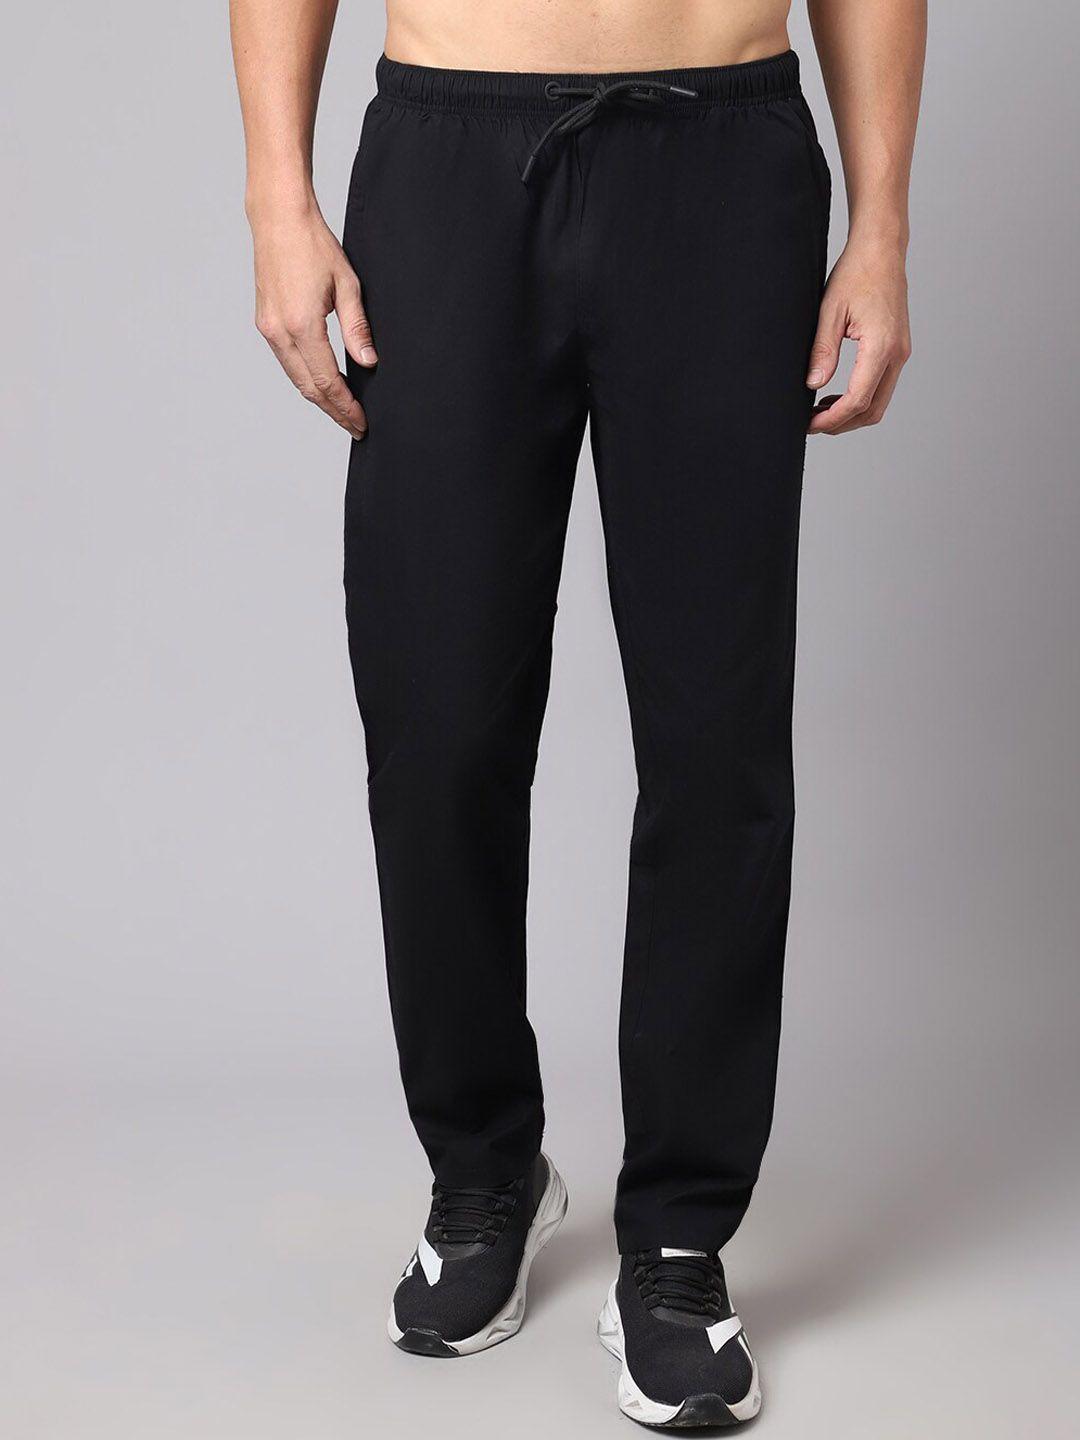 cantabil-men-black-regular-fit-solid-cotton-track-pants